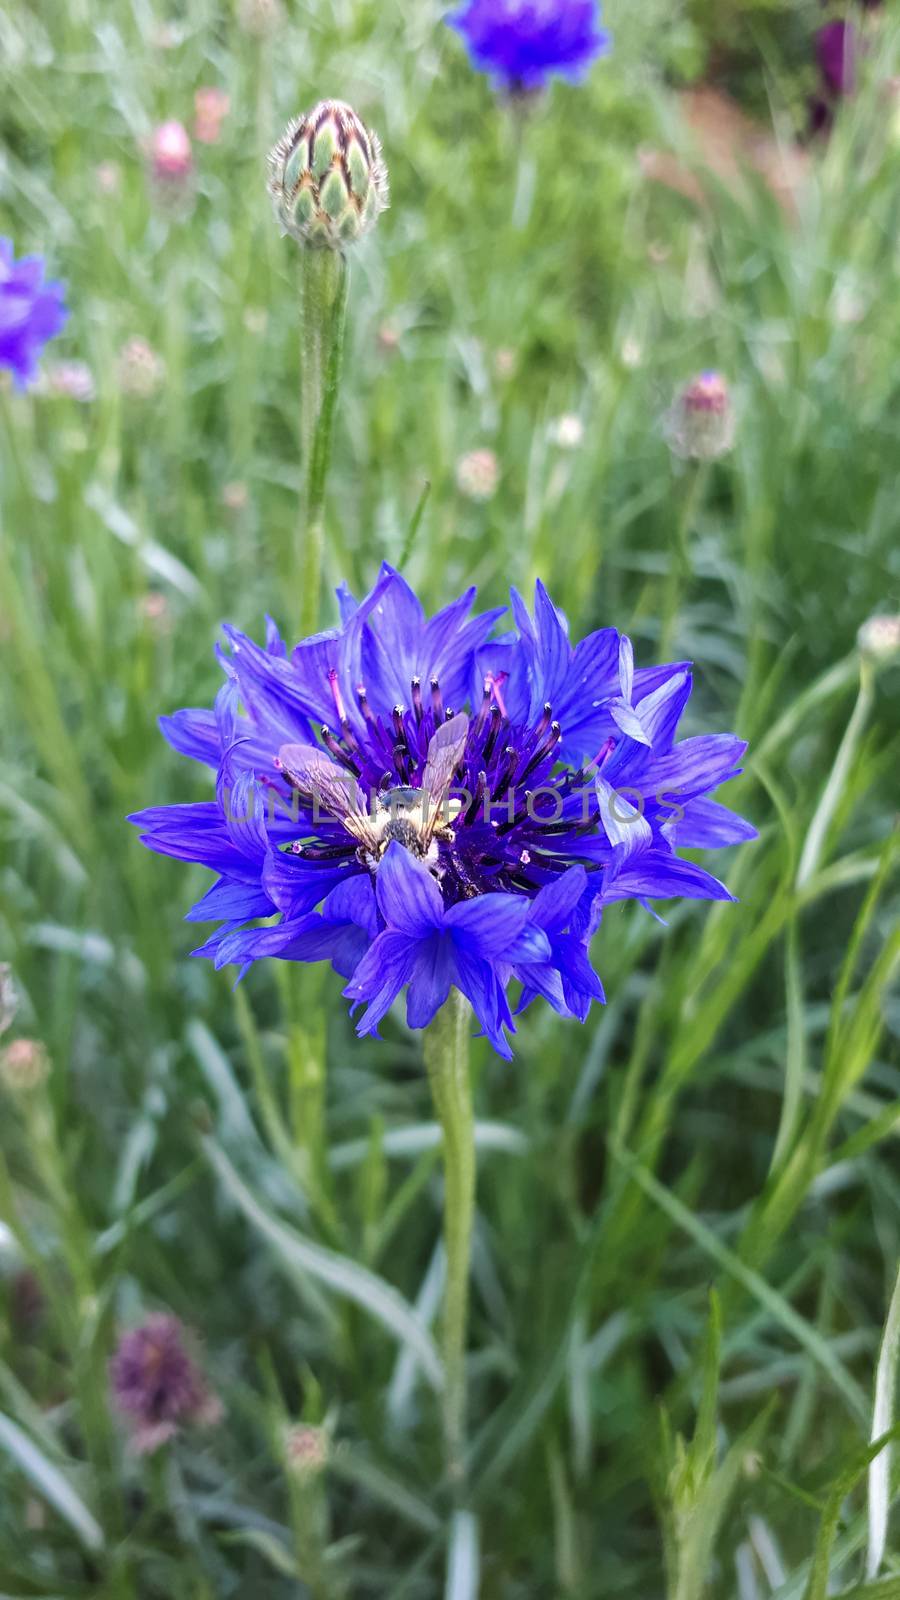 Wild bee pollinates a blue flower. Plant pollination